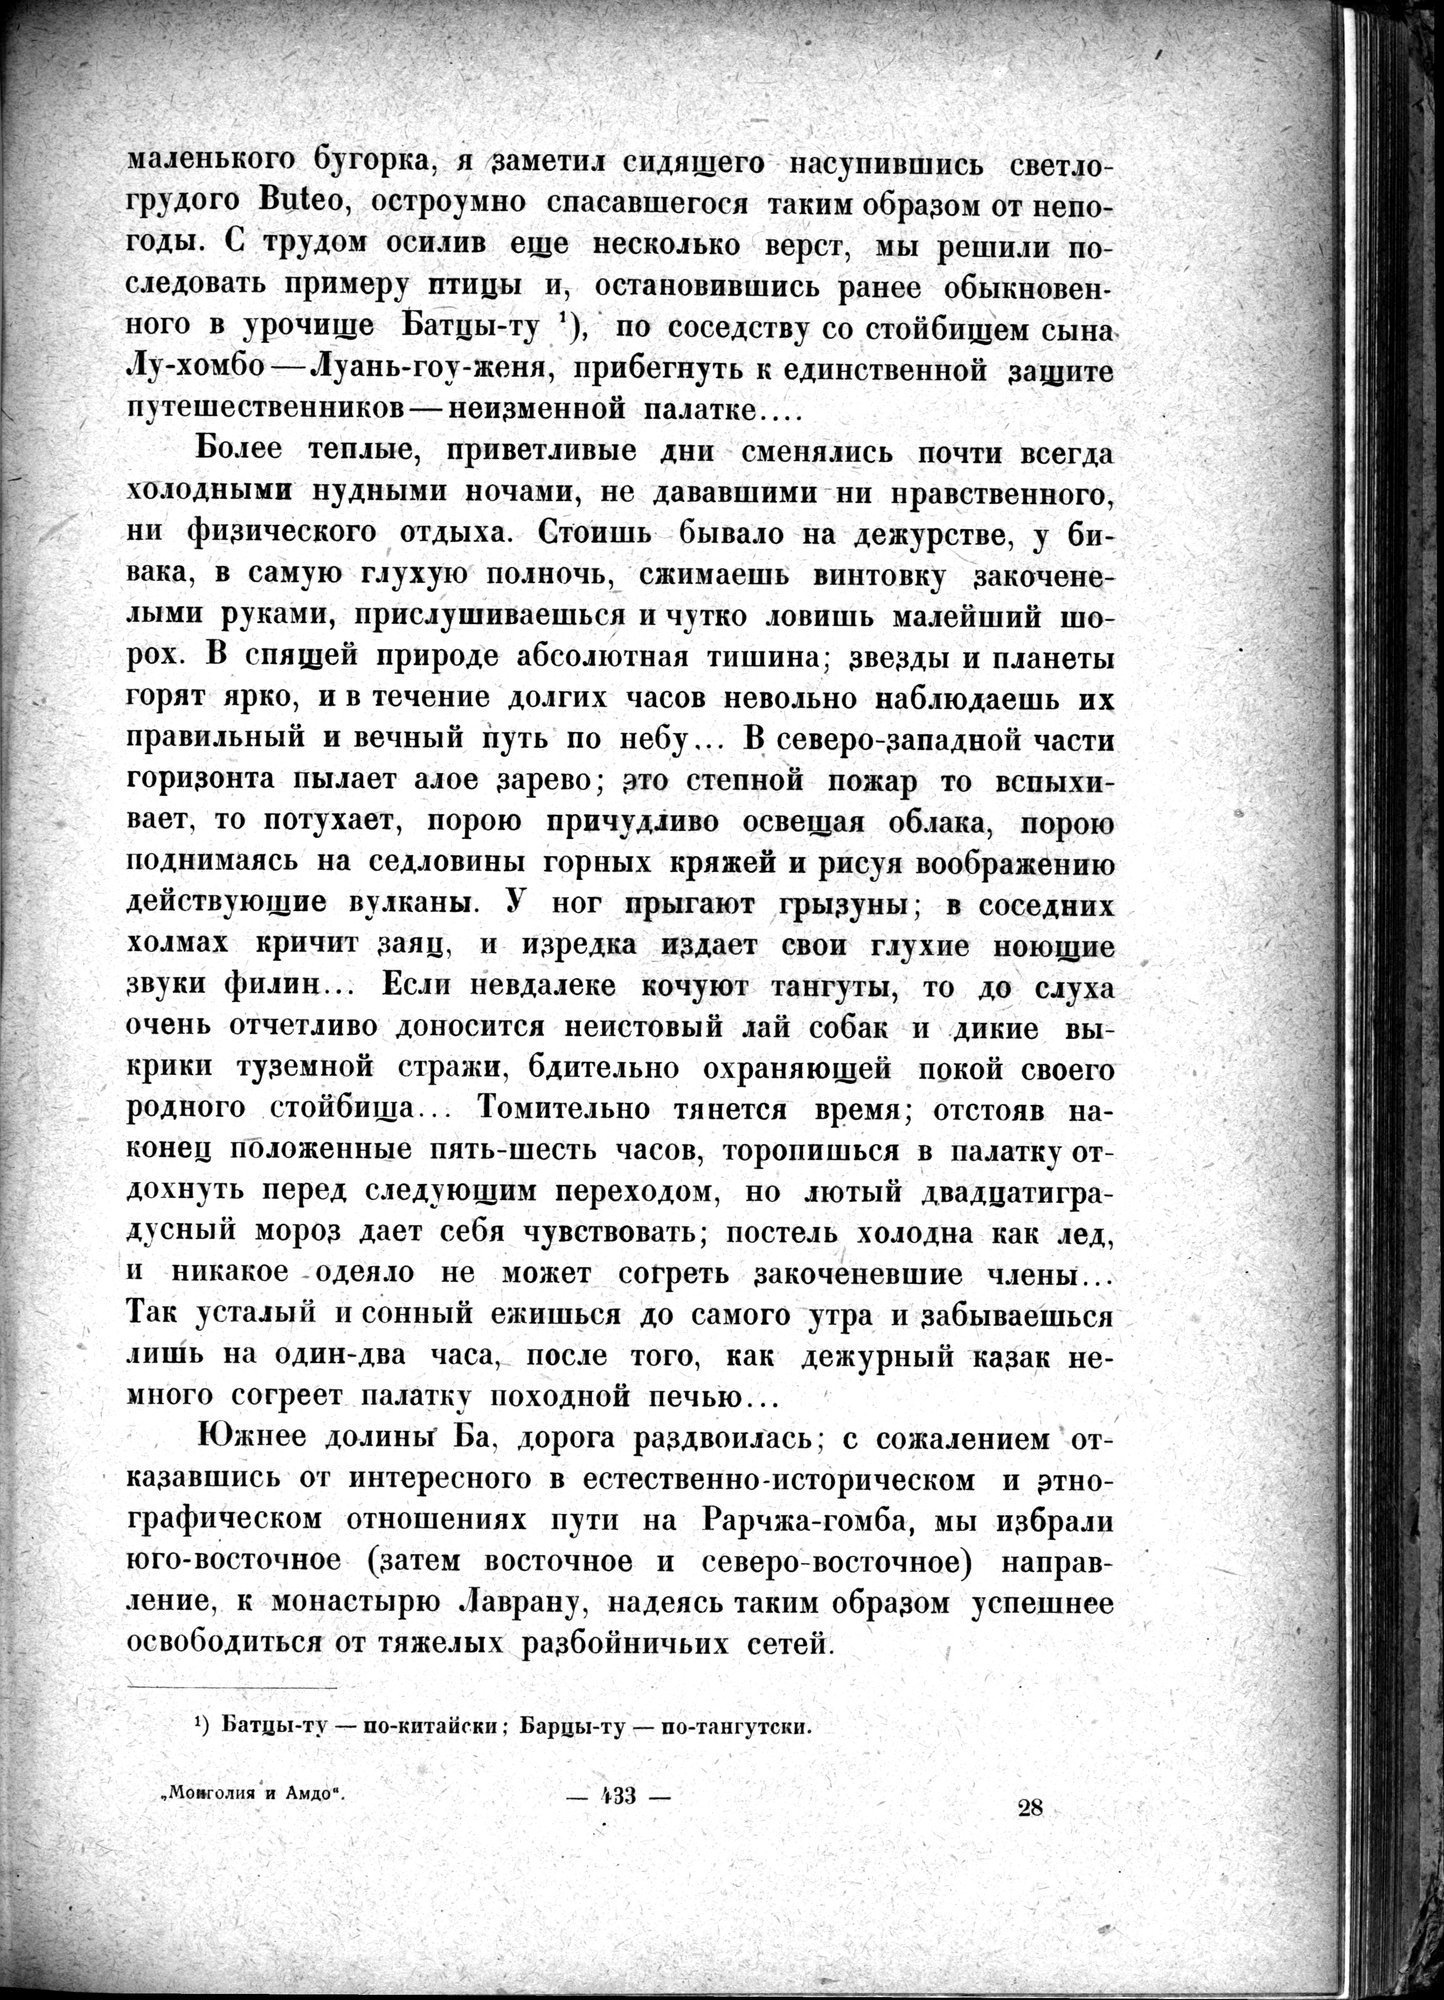 Mongoliya i Amdo i mertby gorod Khara-Khoto : vol.1 / Page 495 (Grayscale High Resolution Image)